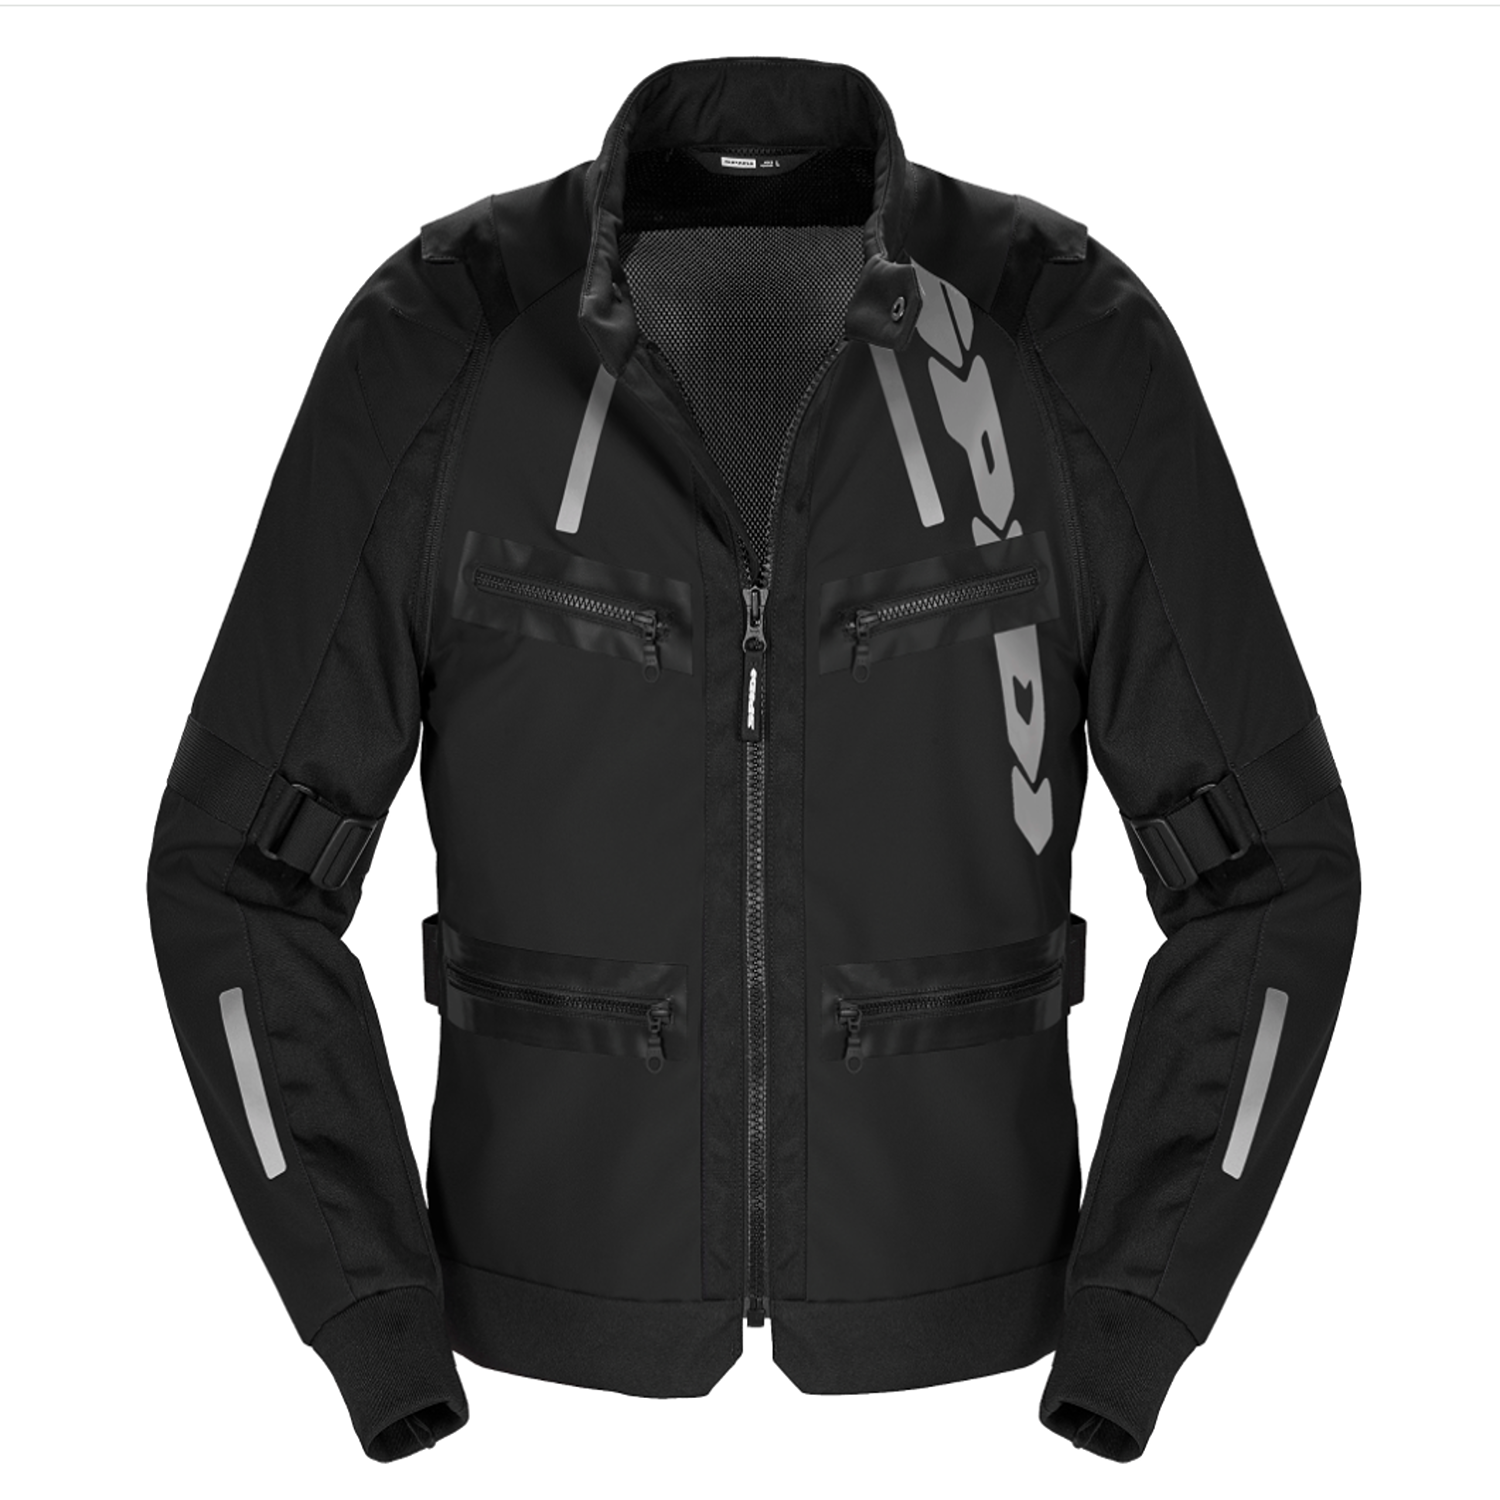 Image of Spidi Enduro Pro Jacket Black Size L ID 8030161485011